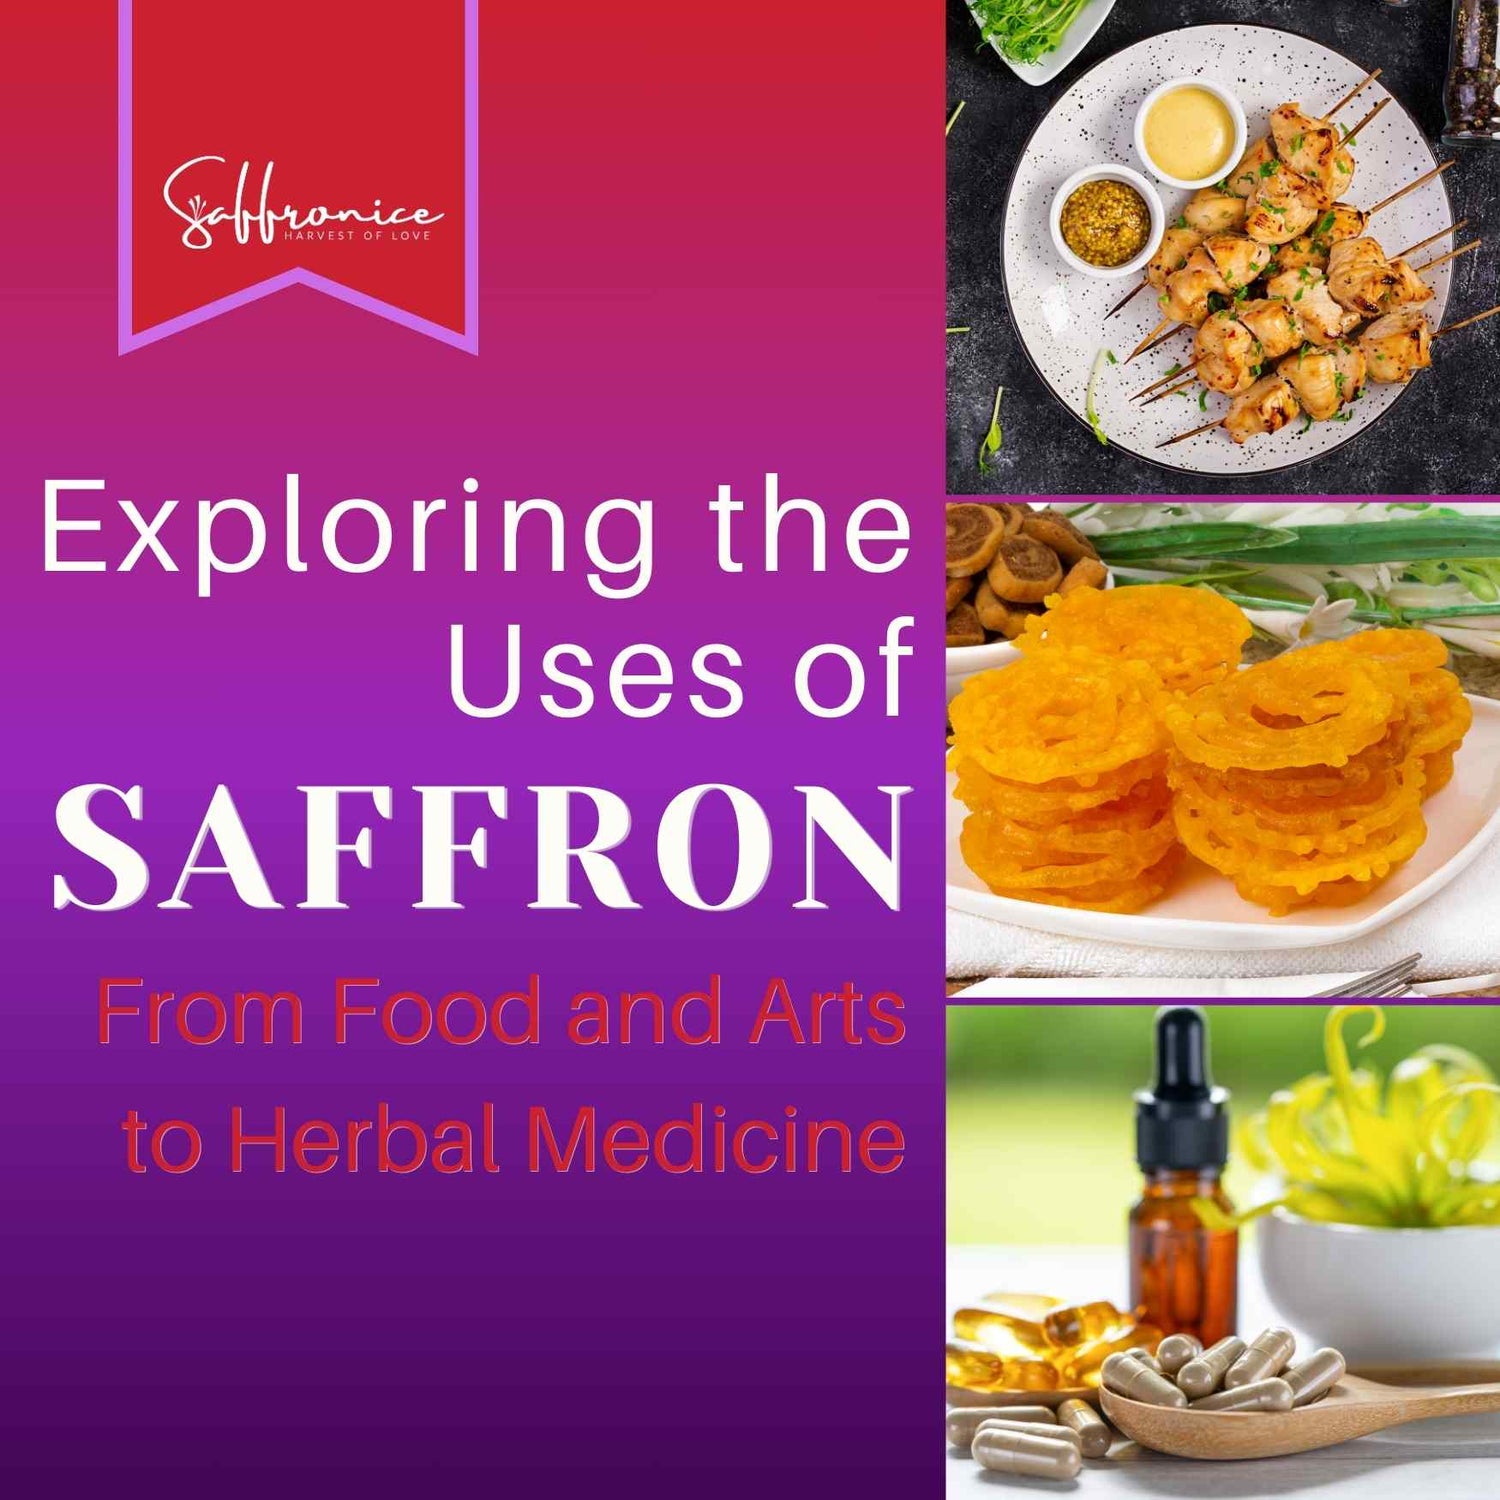 Saffron usage